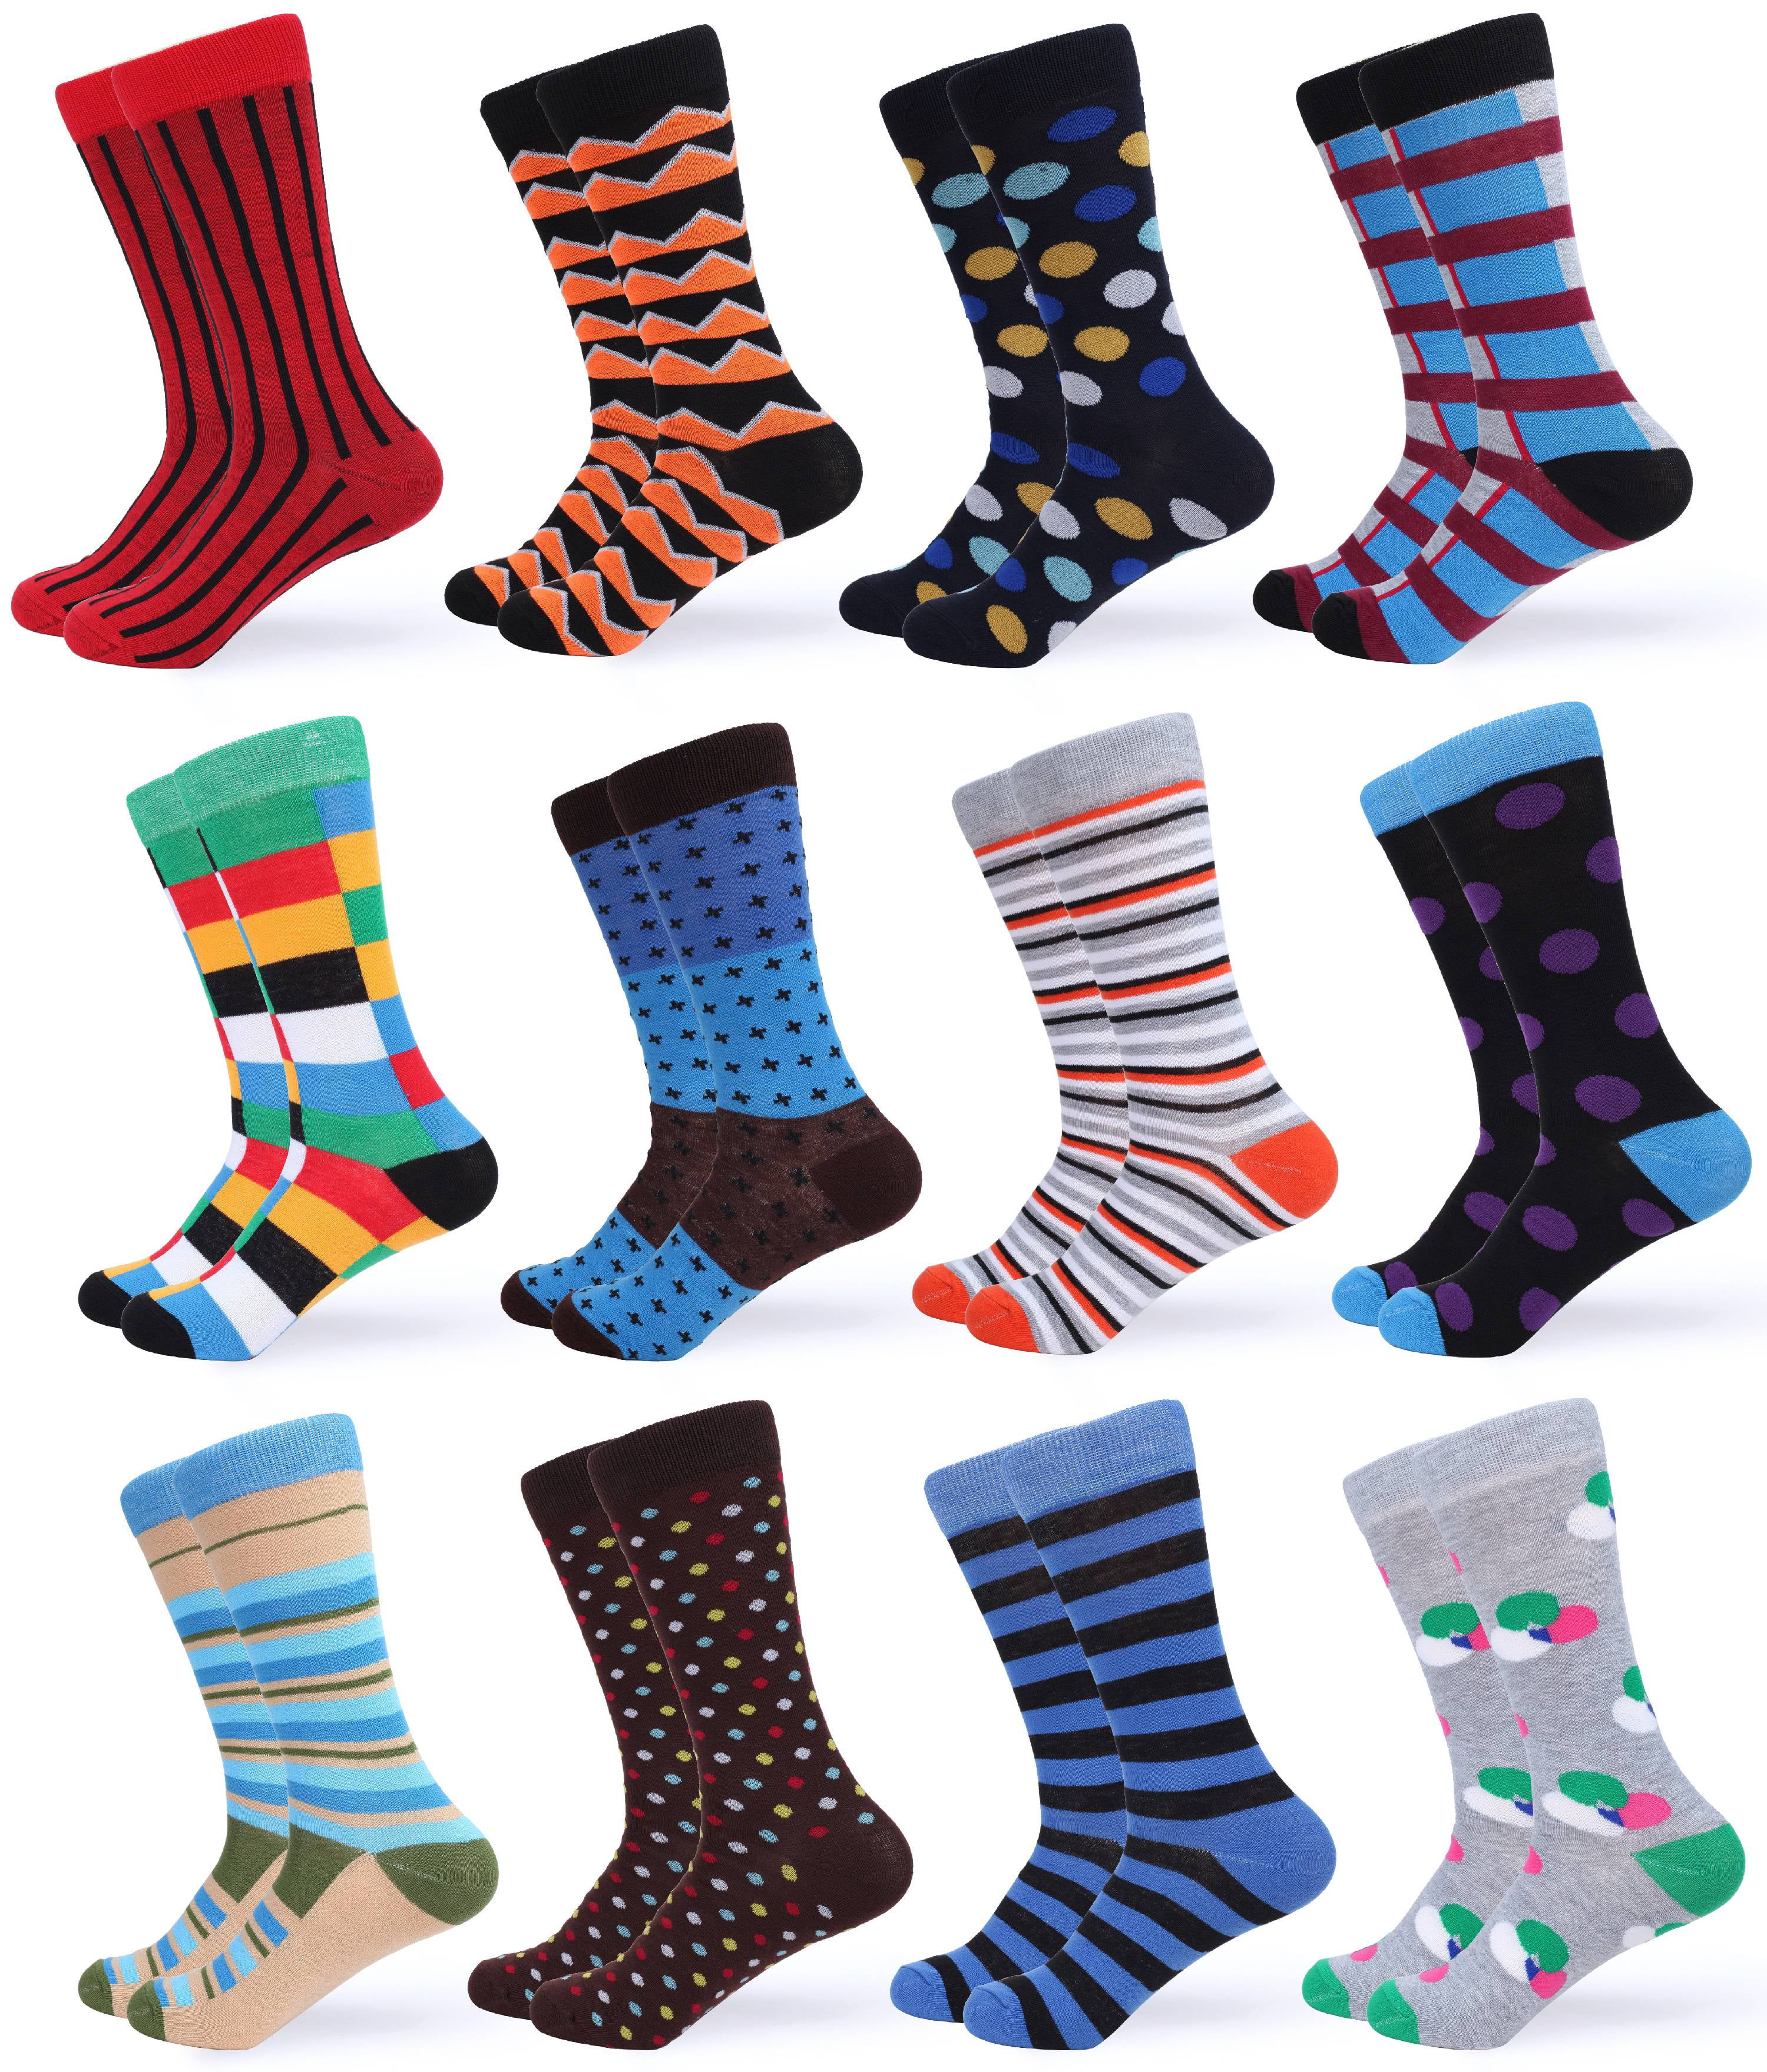 Gallery Seven - Gallery Seven Mens Dress Socks - Funky Colorful Socks ...